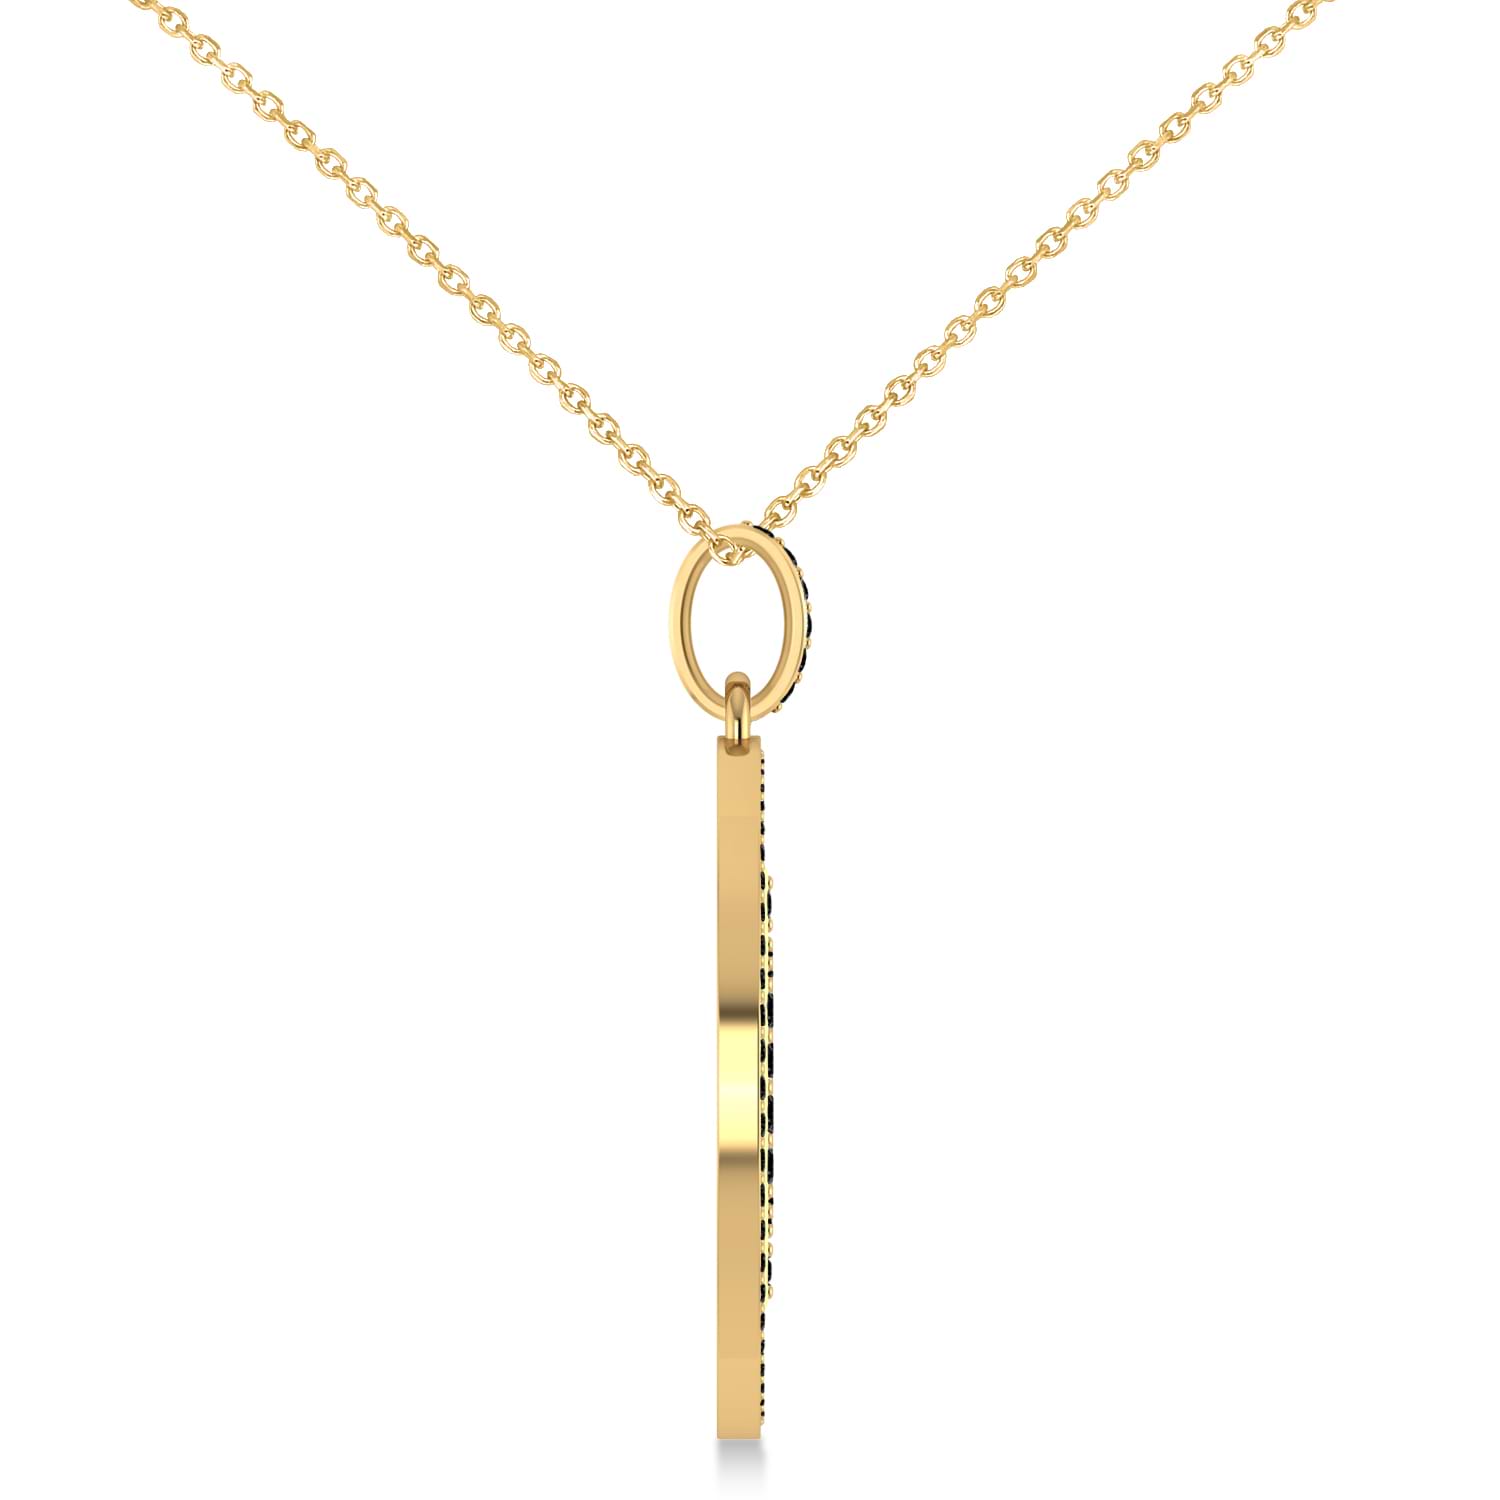 Small Diamond Bitcoin Pendant Necklace